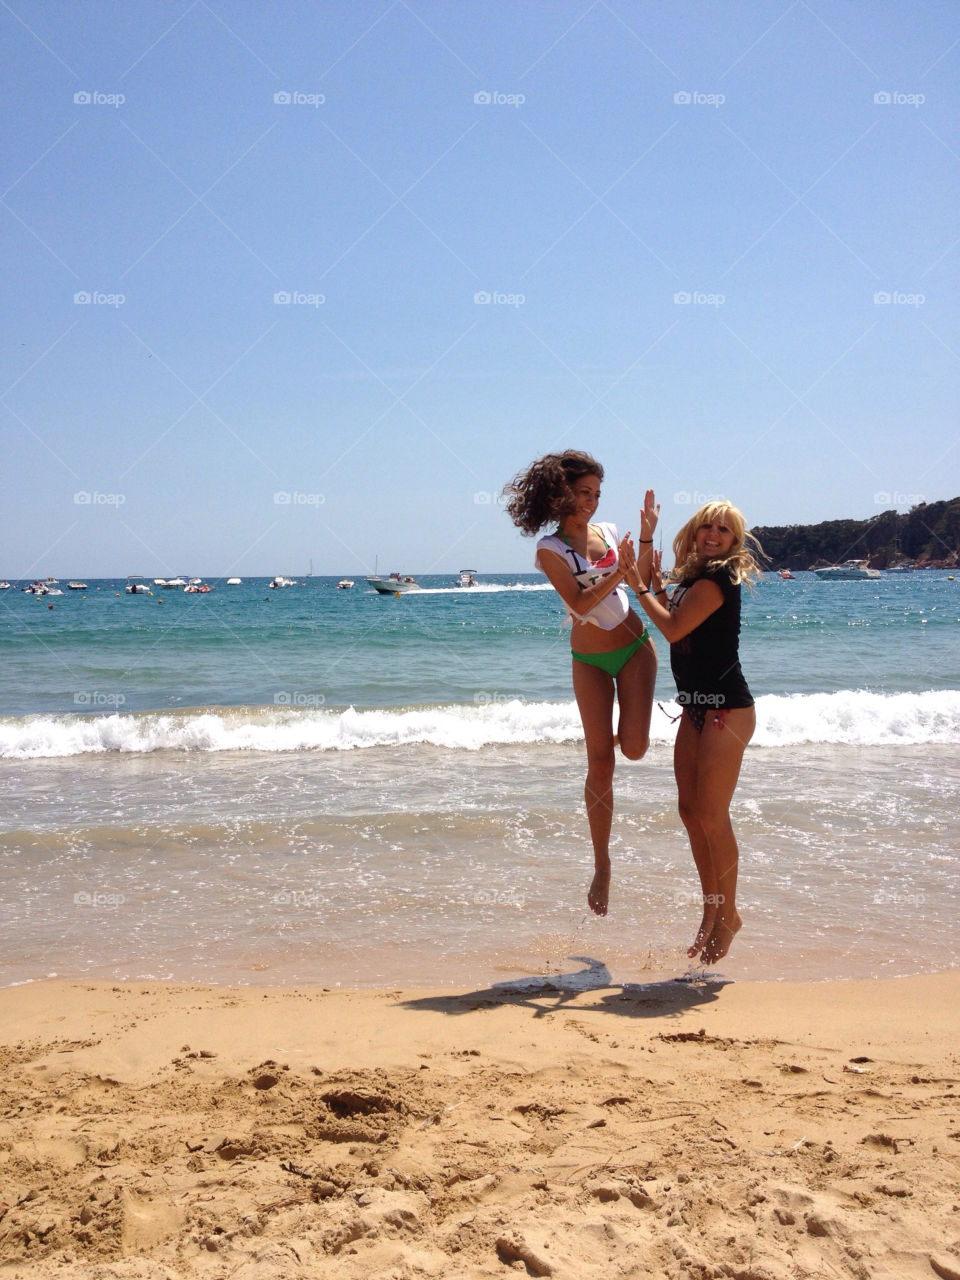 beach summer sun girls by blancandyshop